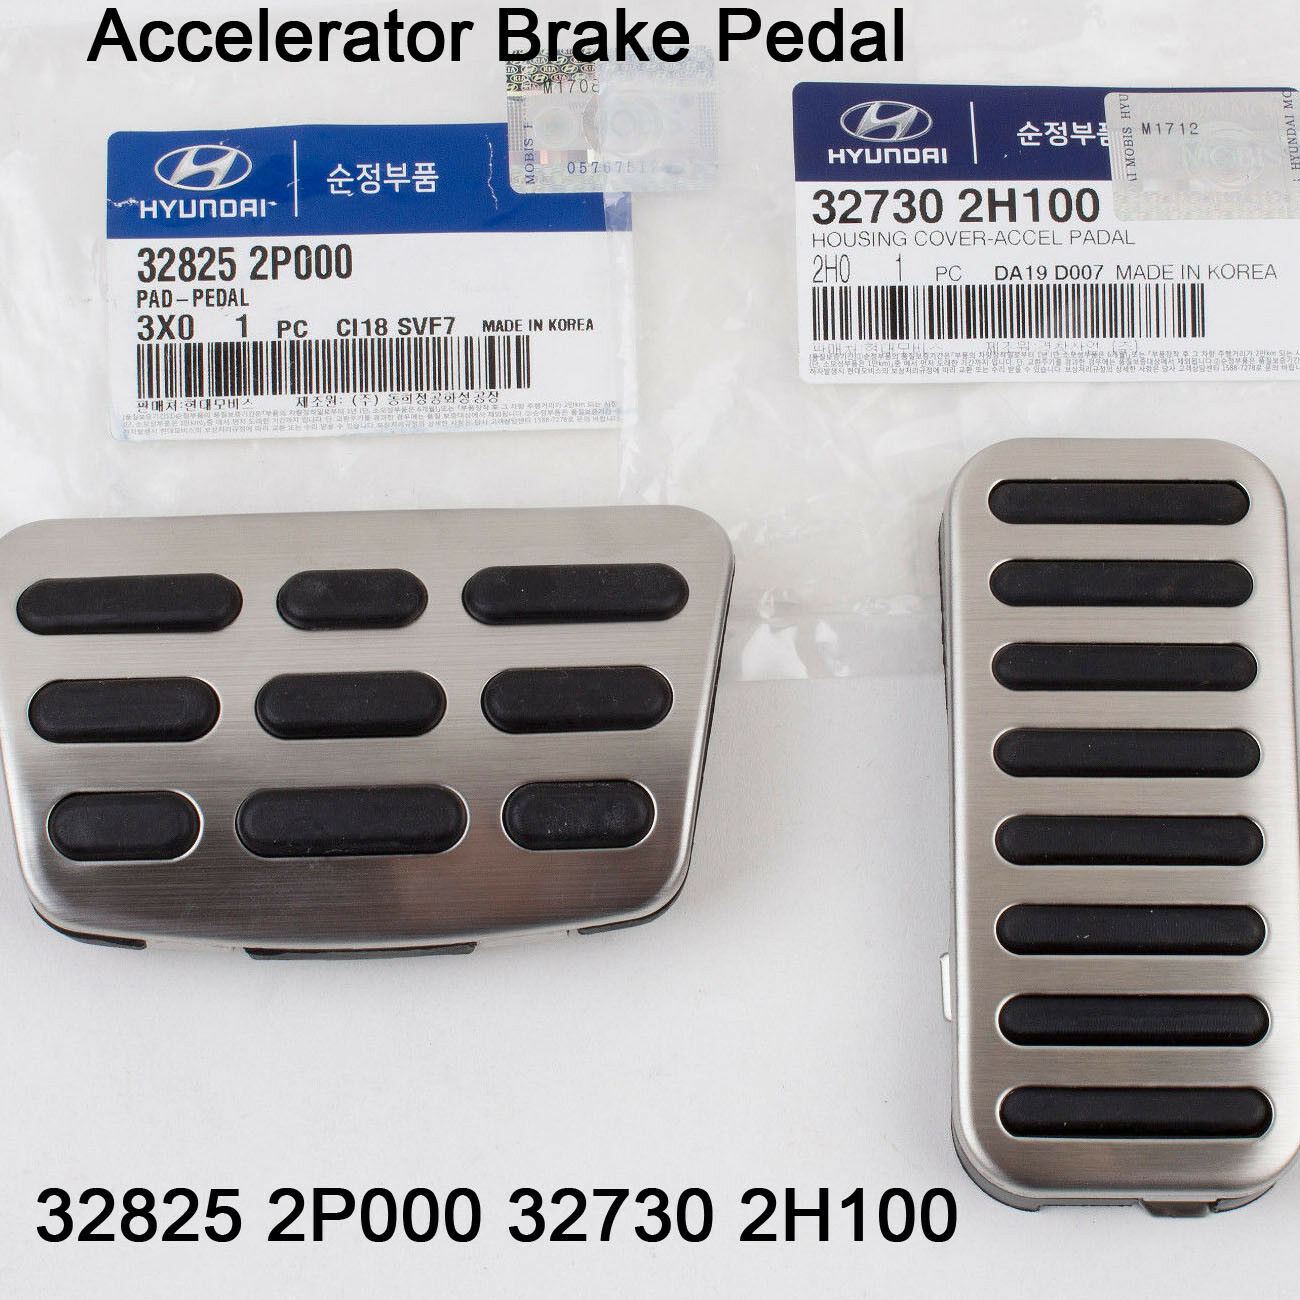 OEM 32825 2P000 32730 2H100 Aluminium Accelerator Brake Pedal for Kia